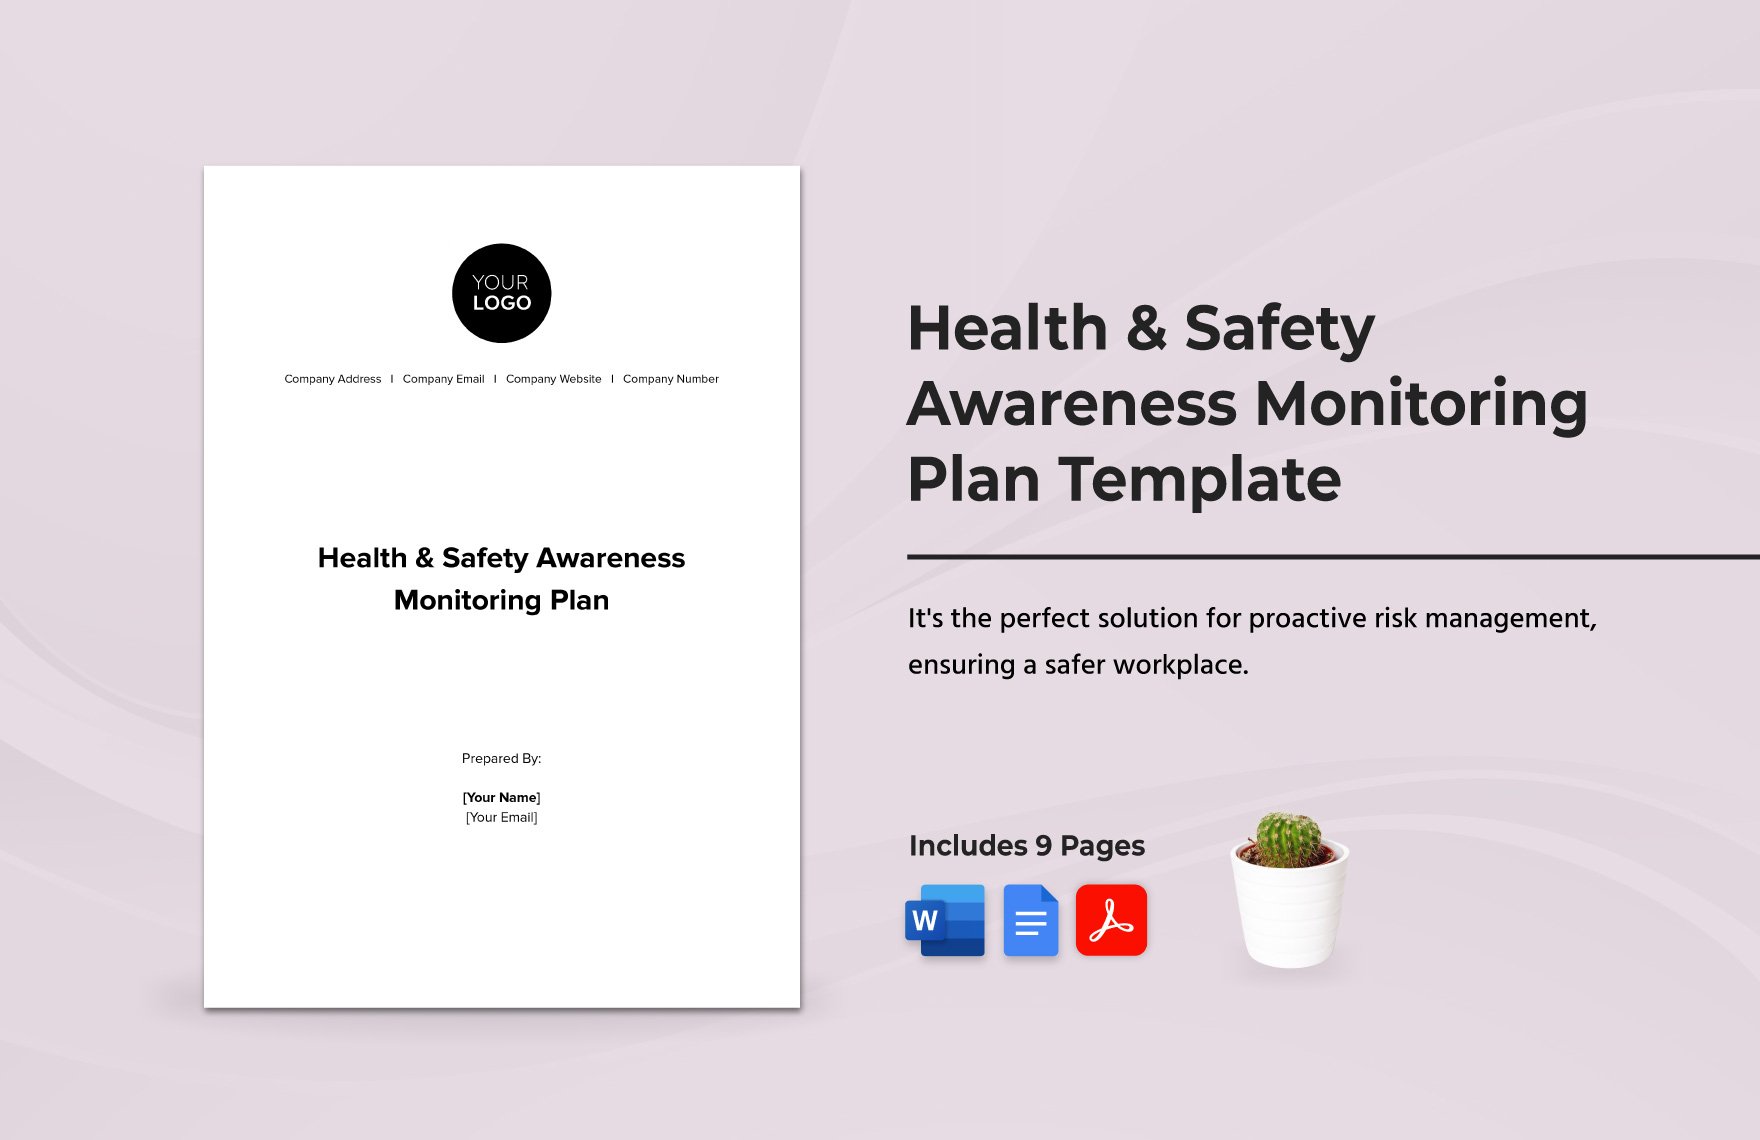 Health & Safety Awareness Monitoring Plan Template